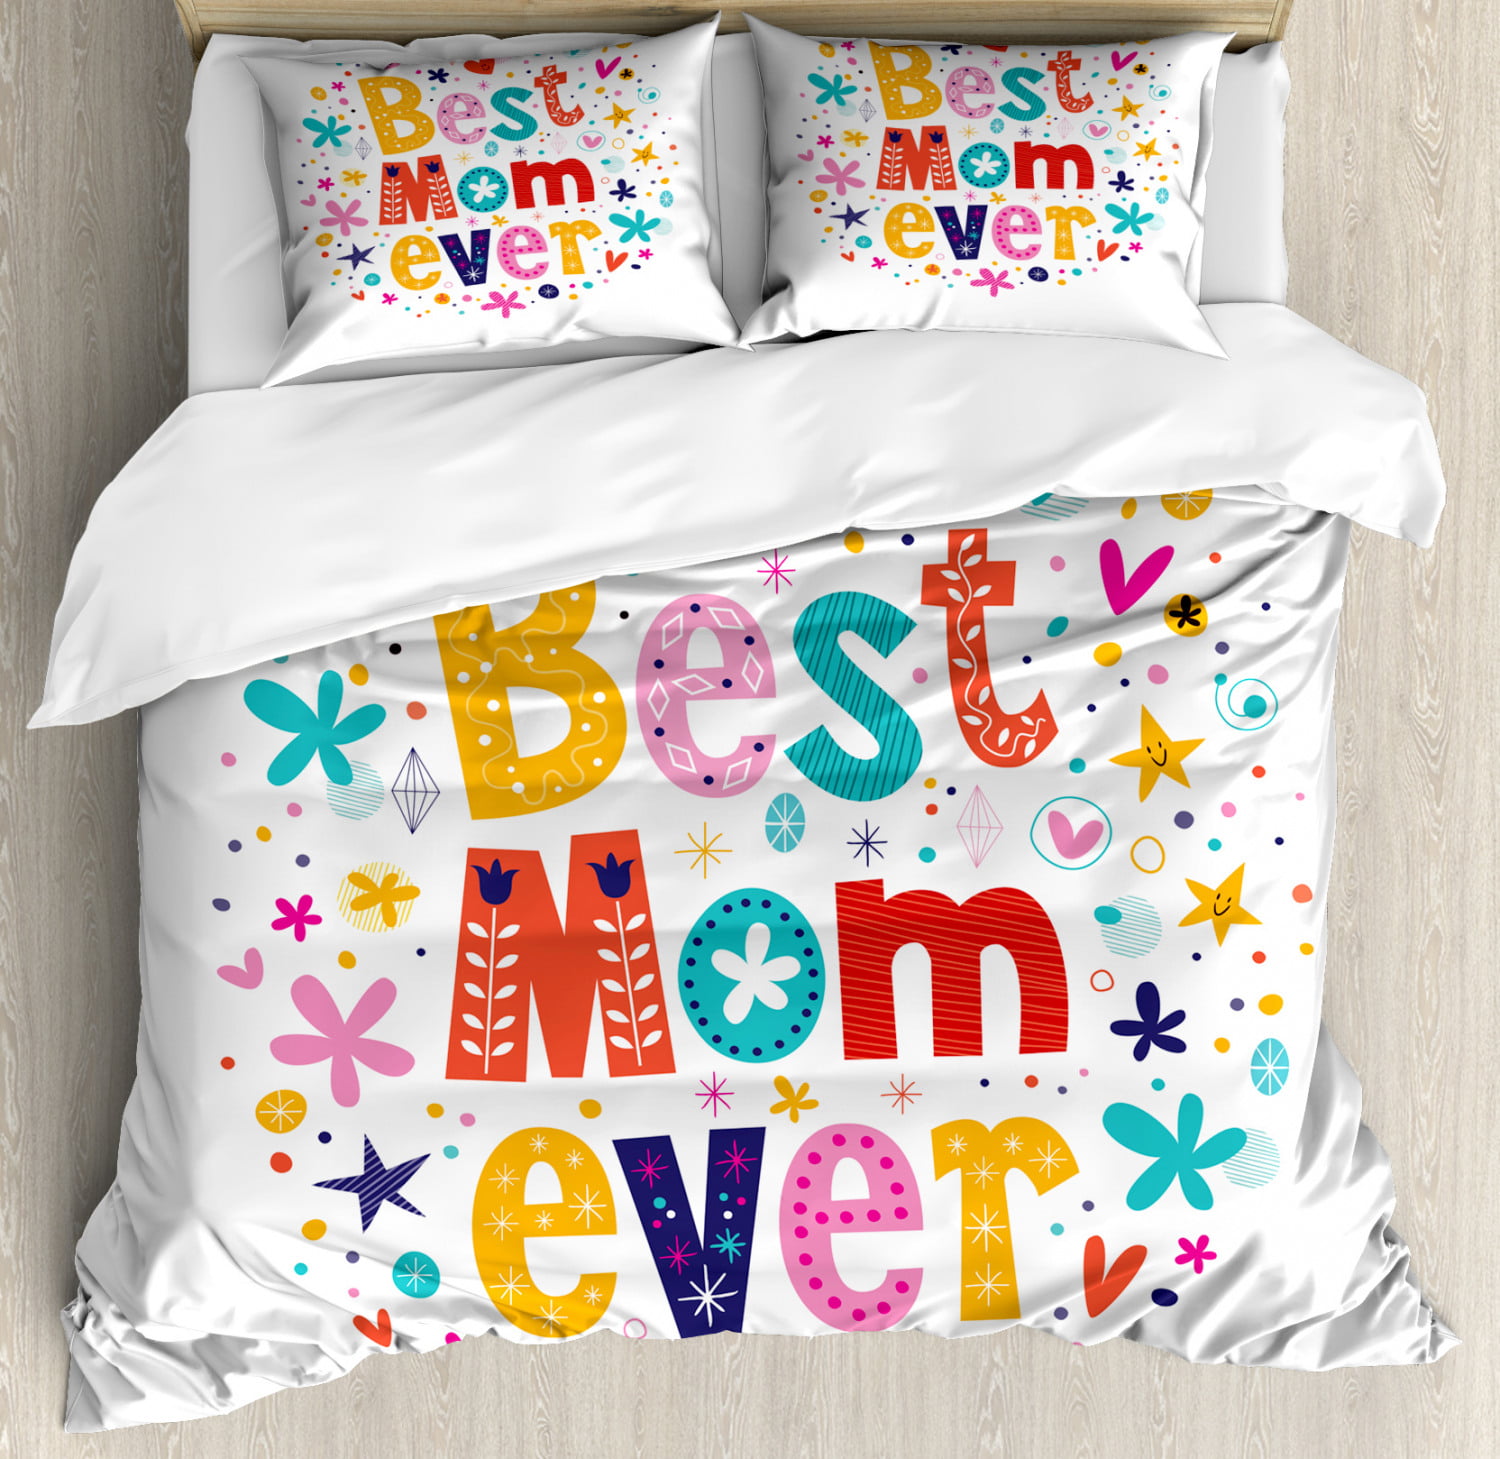 Colorful Doodle Pillow Sham Decorative Pillowcase 3 Sizes for Bedroom Decor 